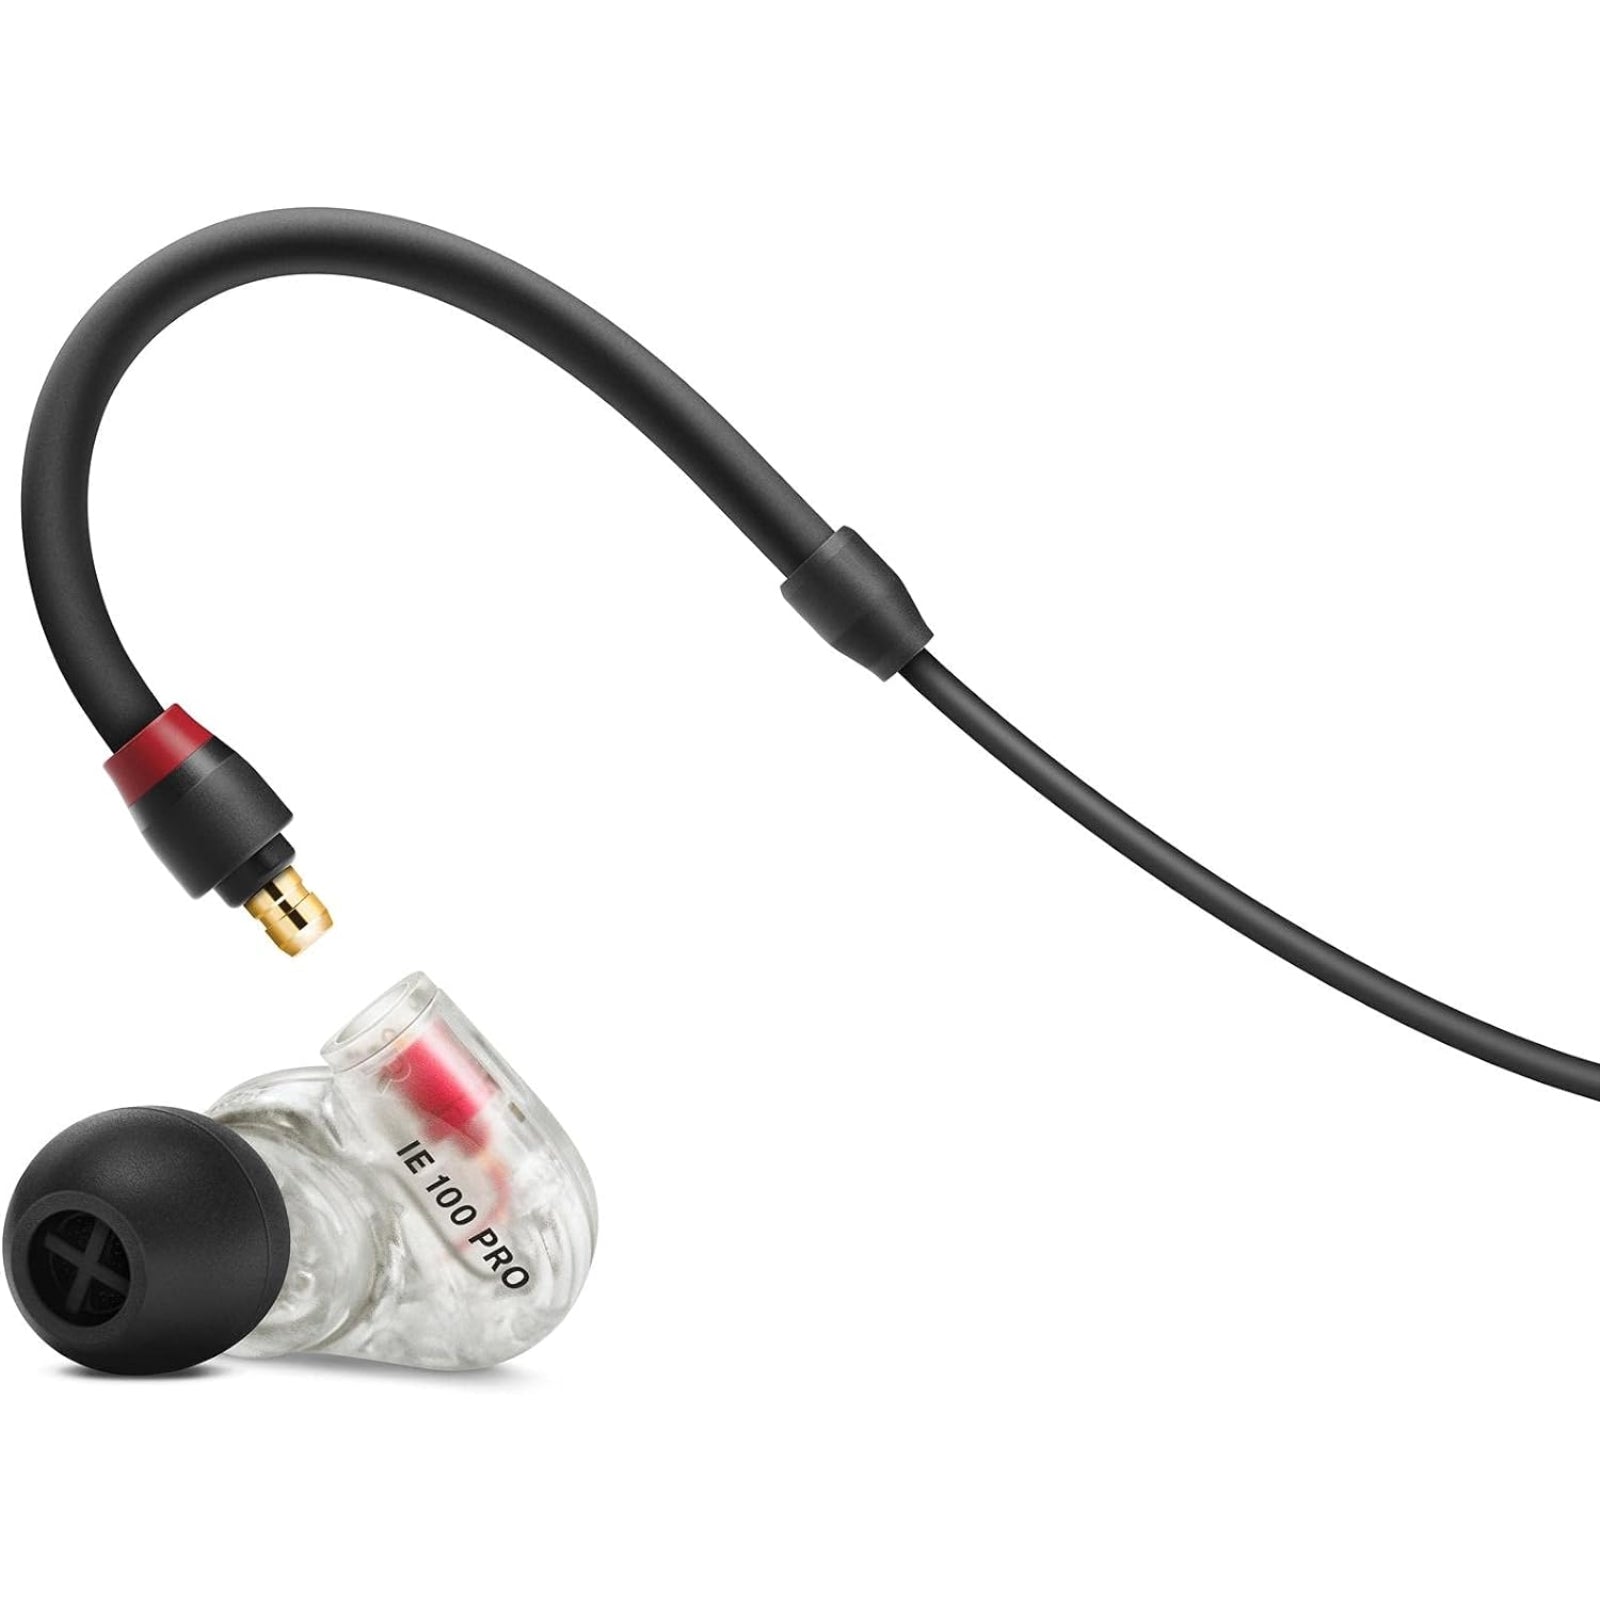 Sennheiser IE 100 PRO In-Ear Headphones Clear